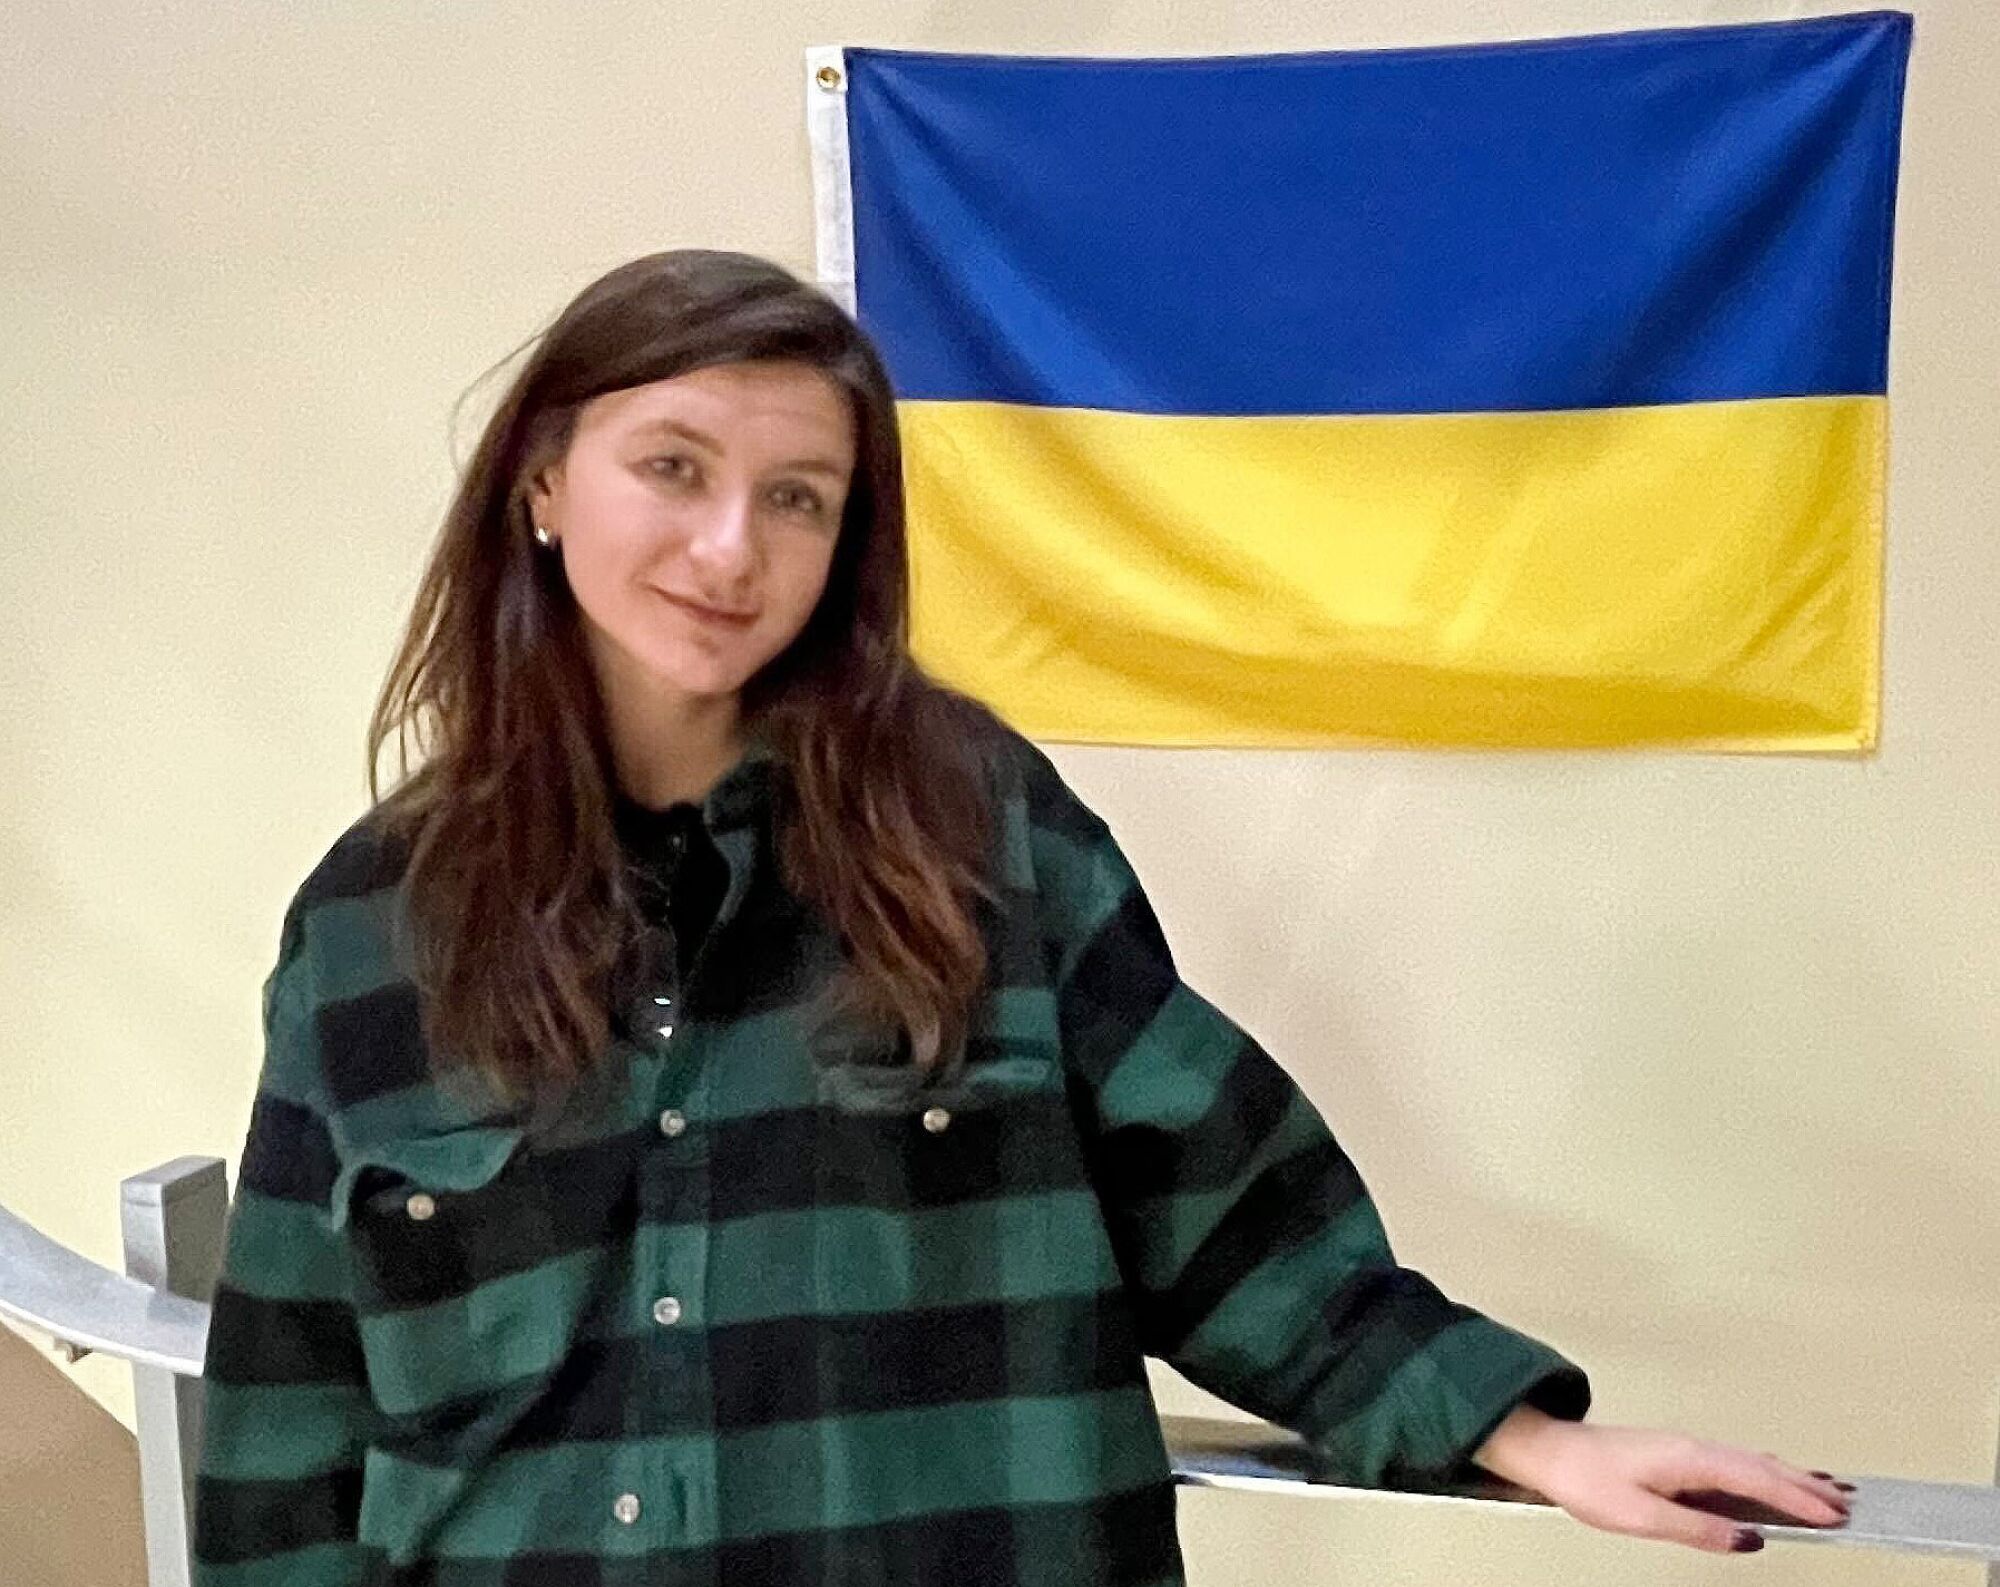 A woman stands near a Ukrainian flag mounted on a wall